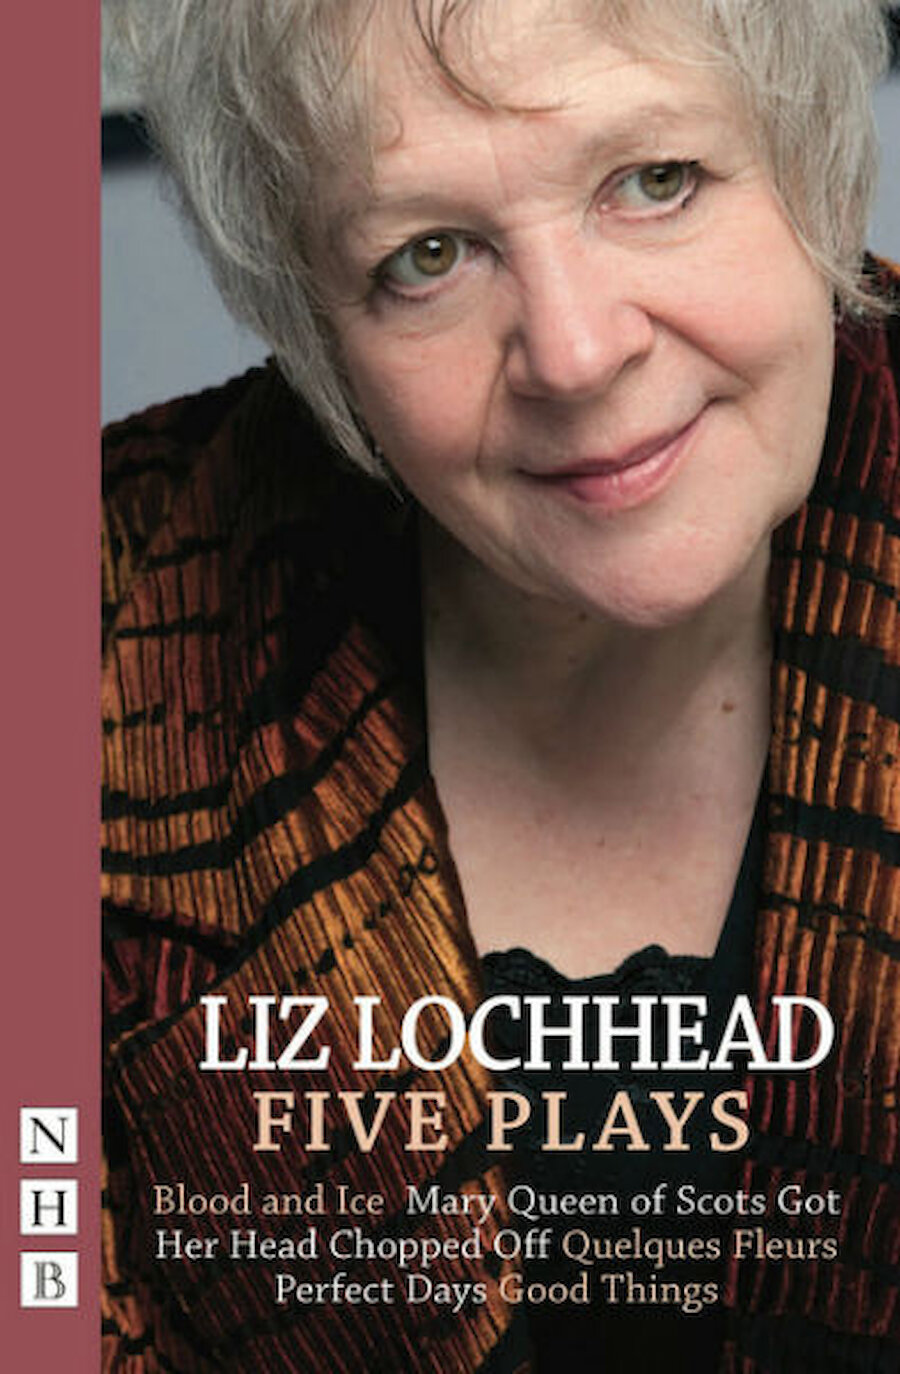 Liz Lochhead, formerly Scots 'Makar' (Courtesy Nick Hern Books)